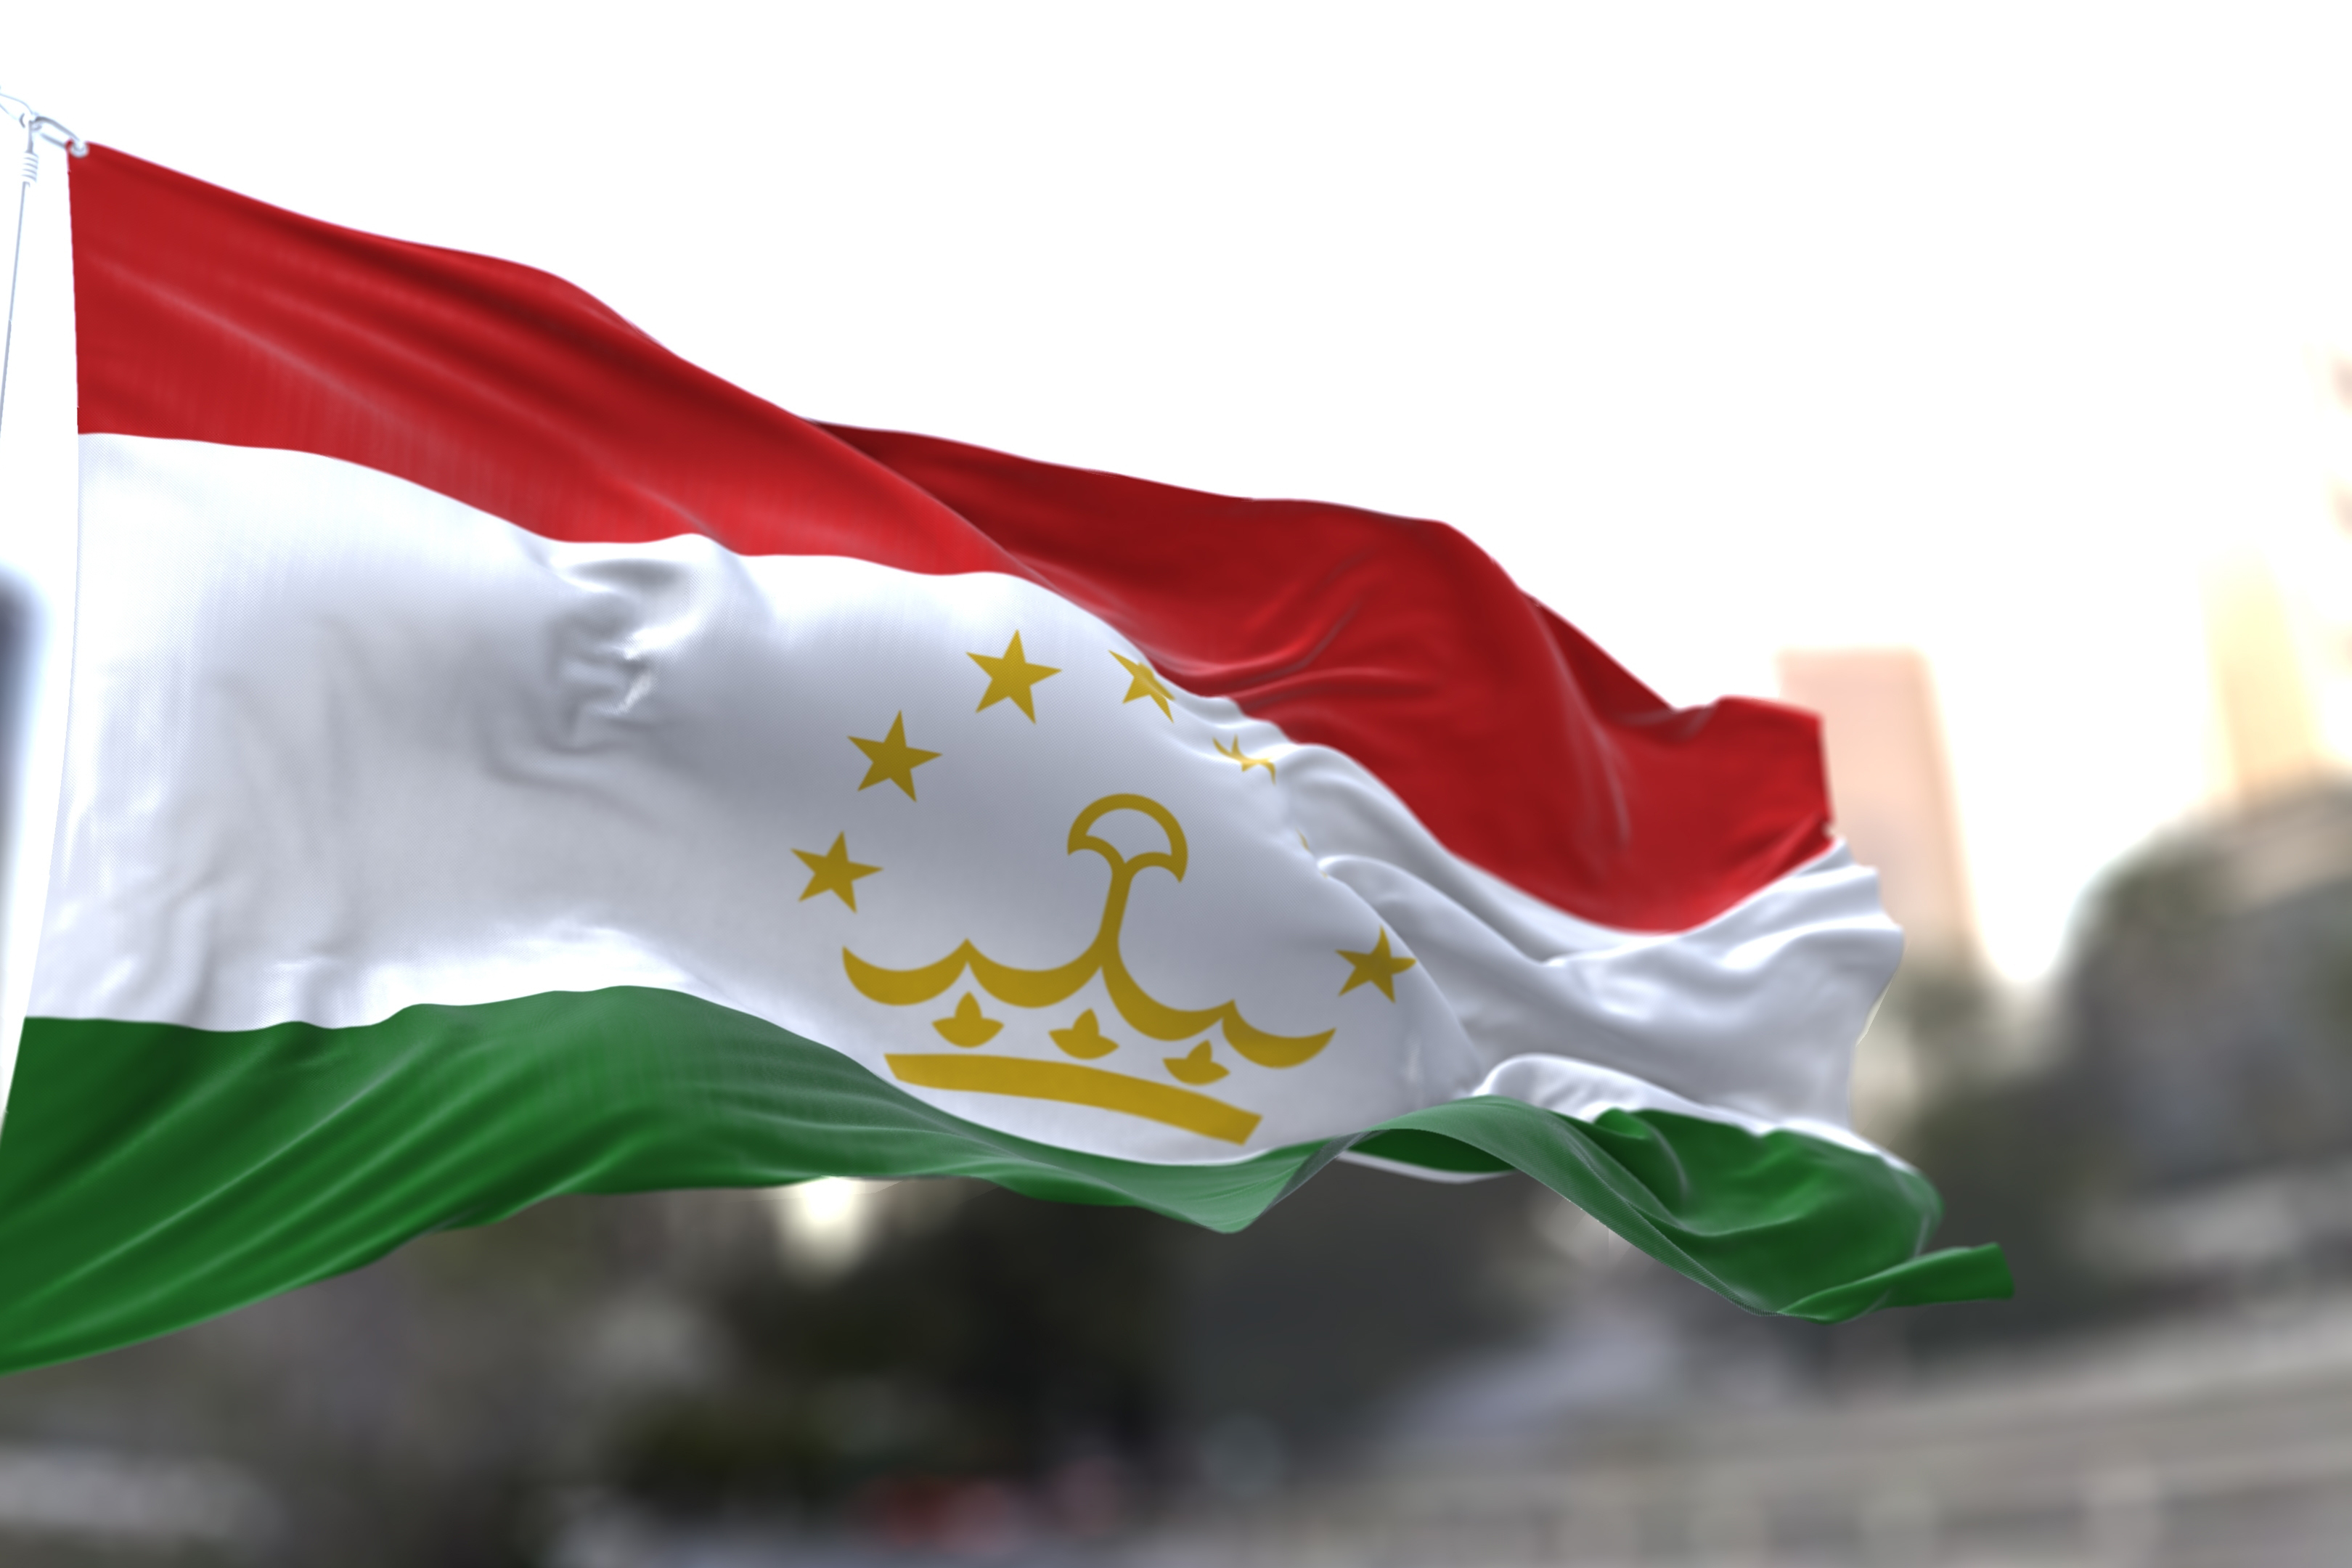 The flag symbolizes the citizenship of Tajikistan